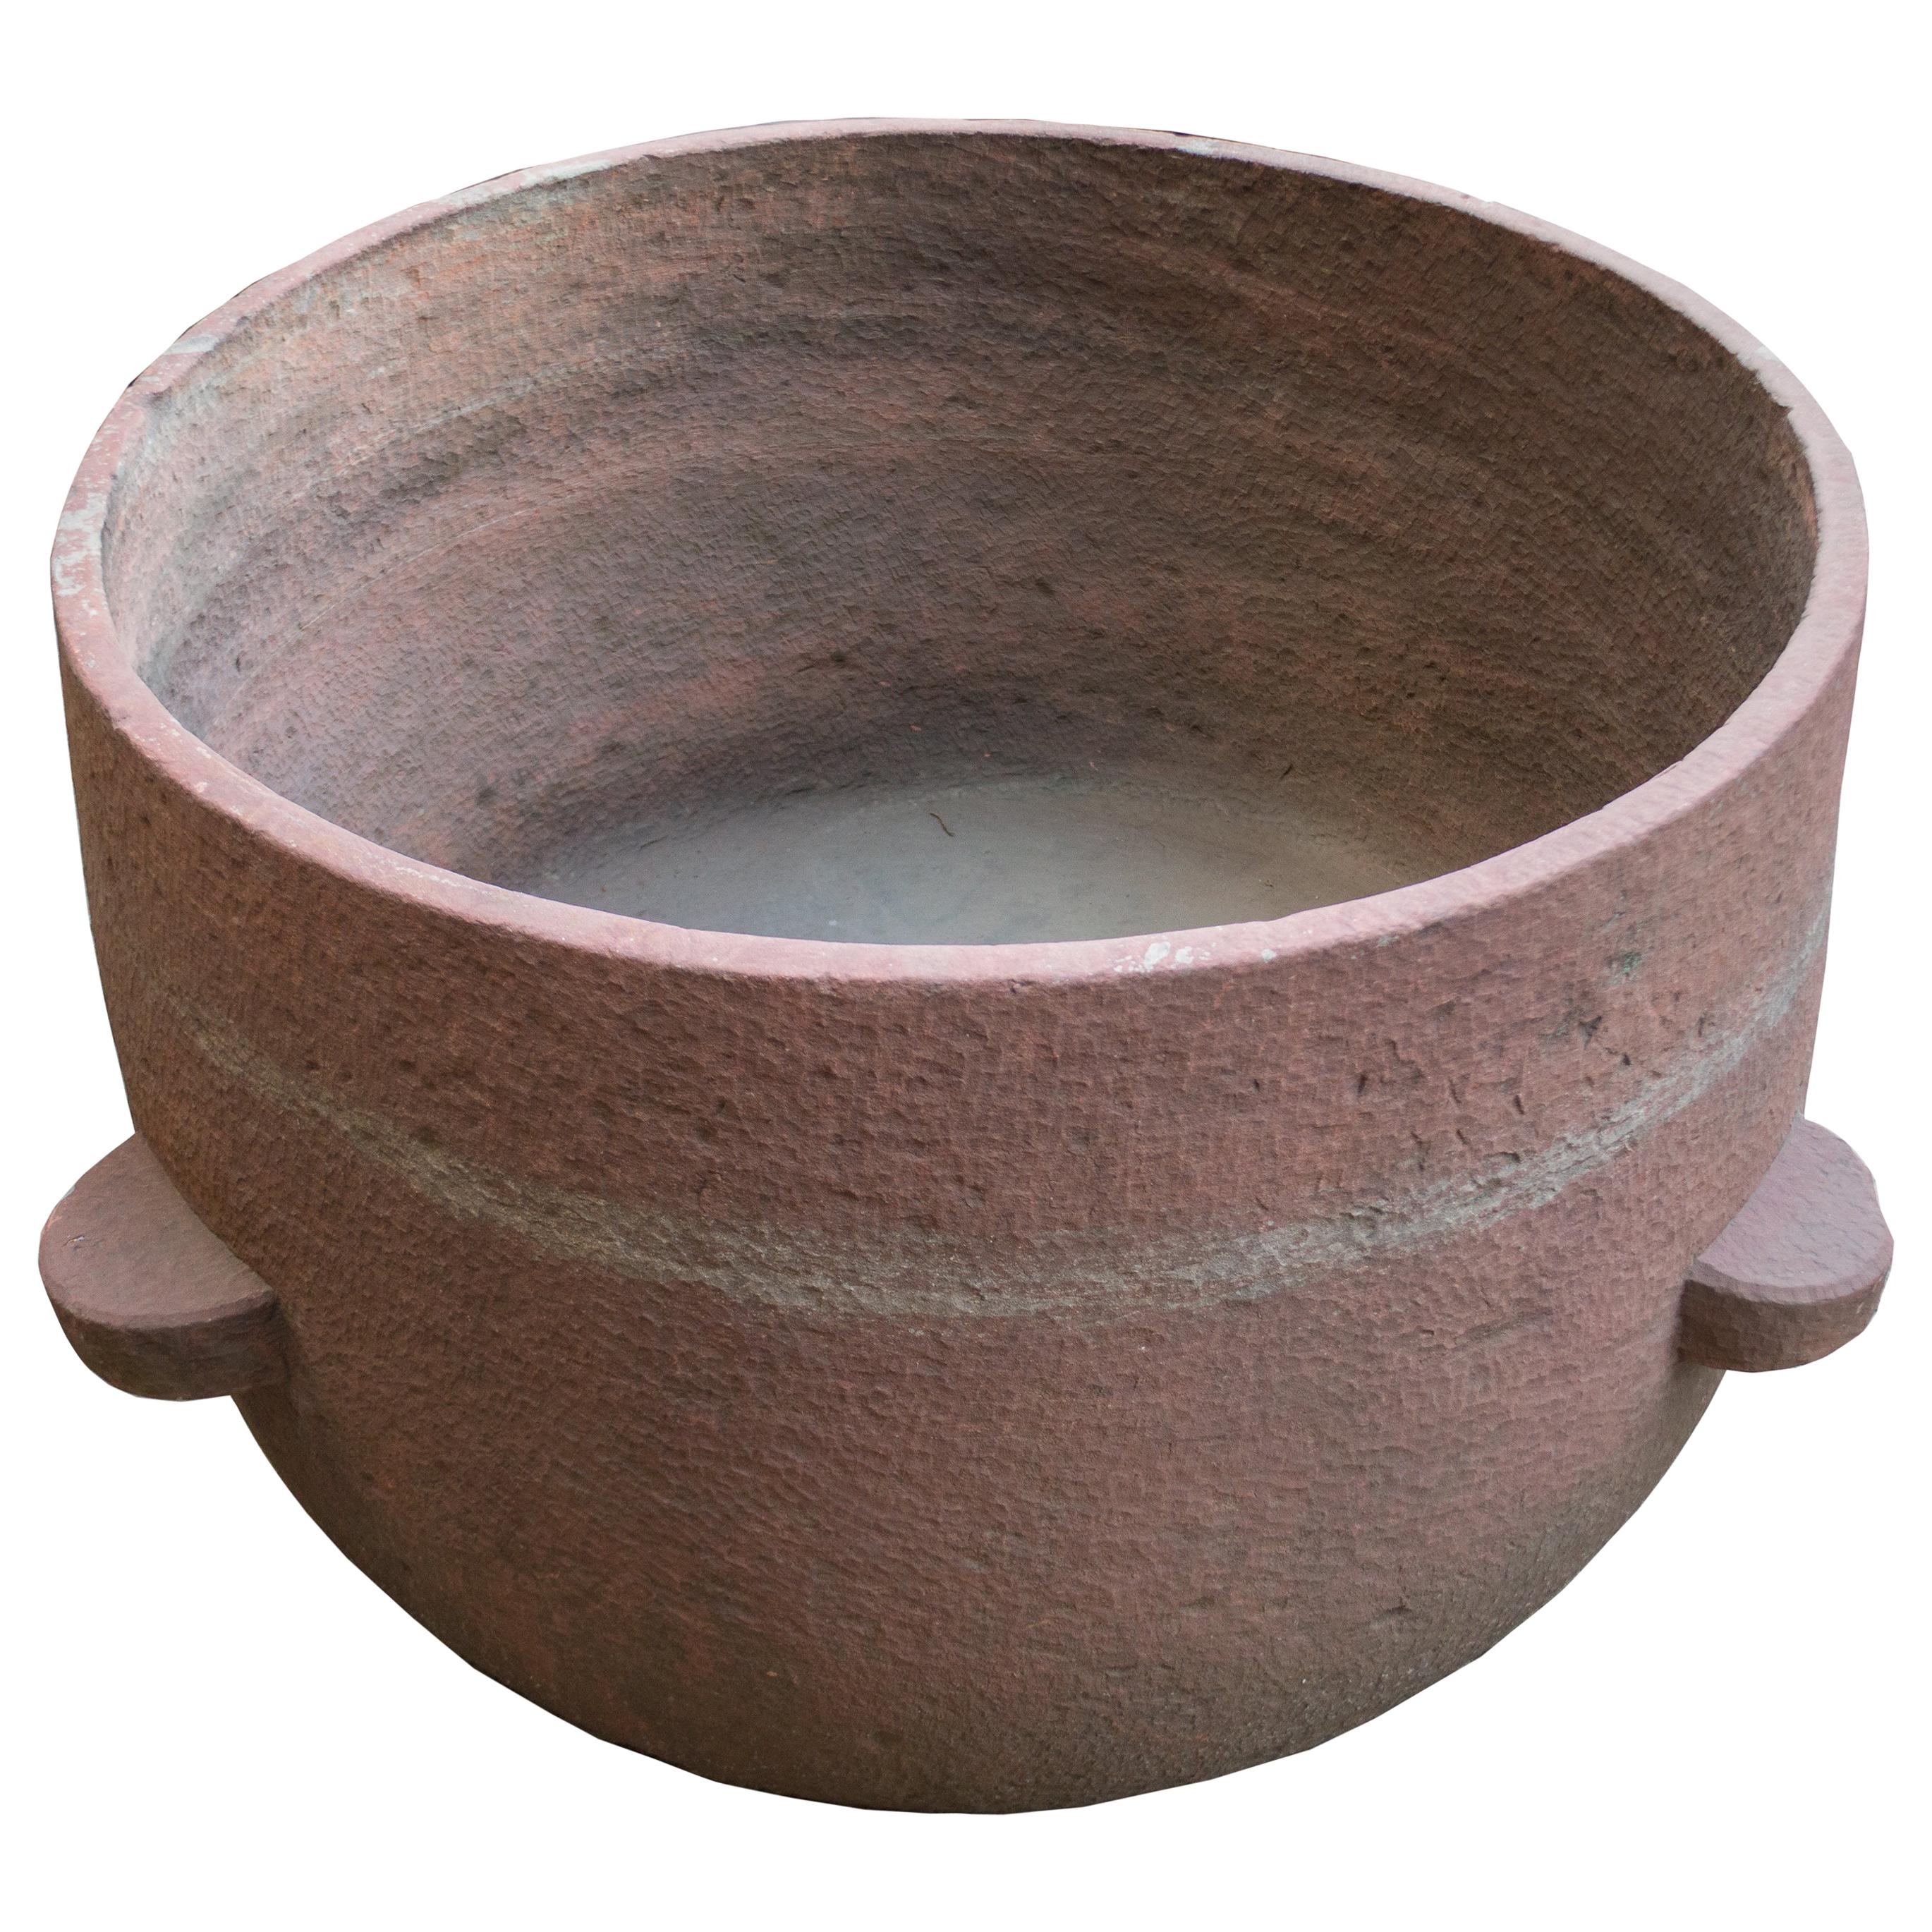 Shekhawati Desert Zone, India, Monolithic Stone Pots with Handles